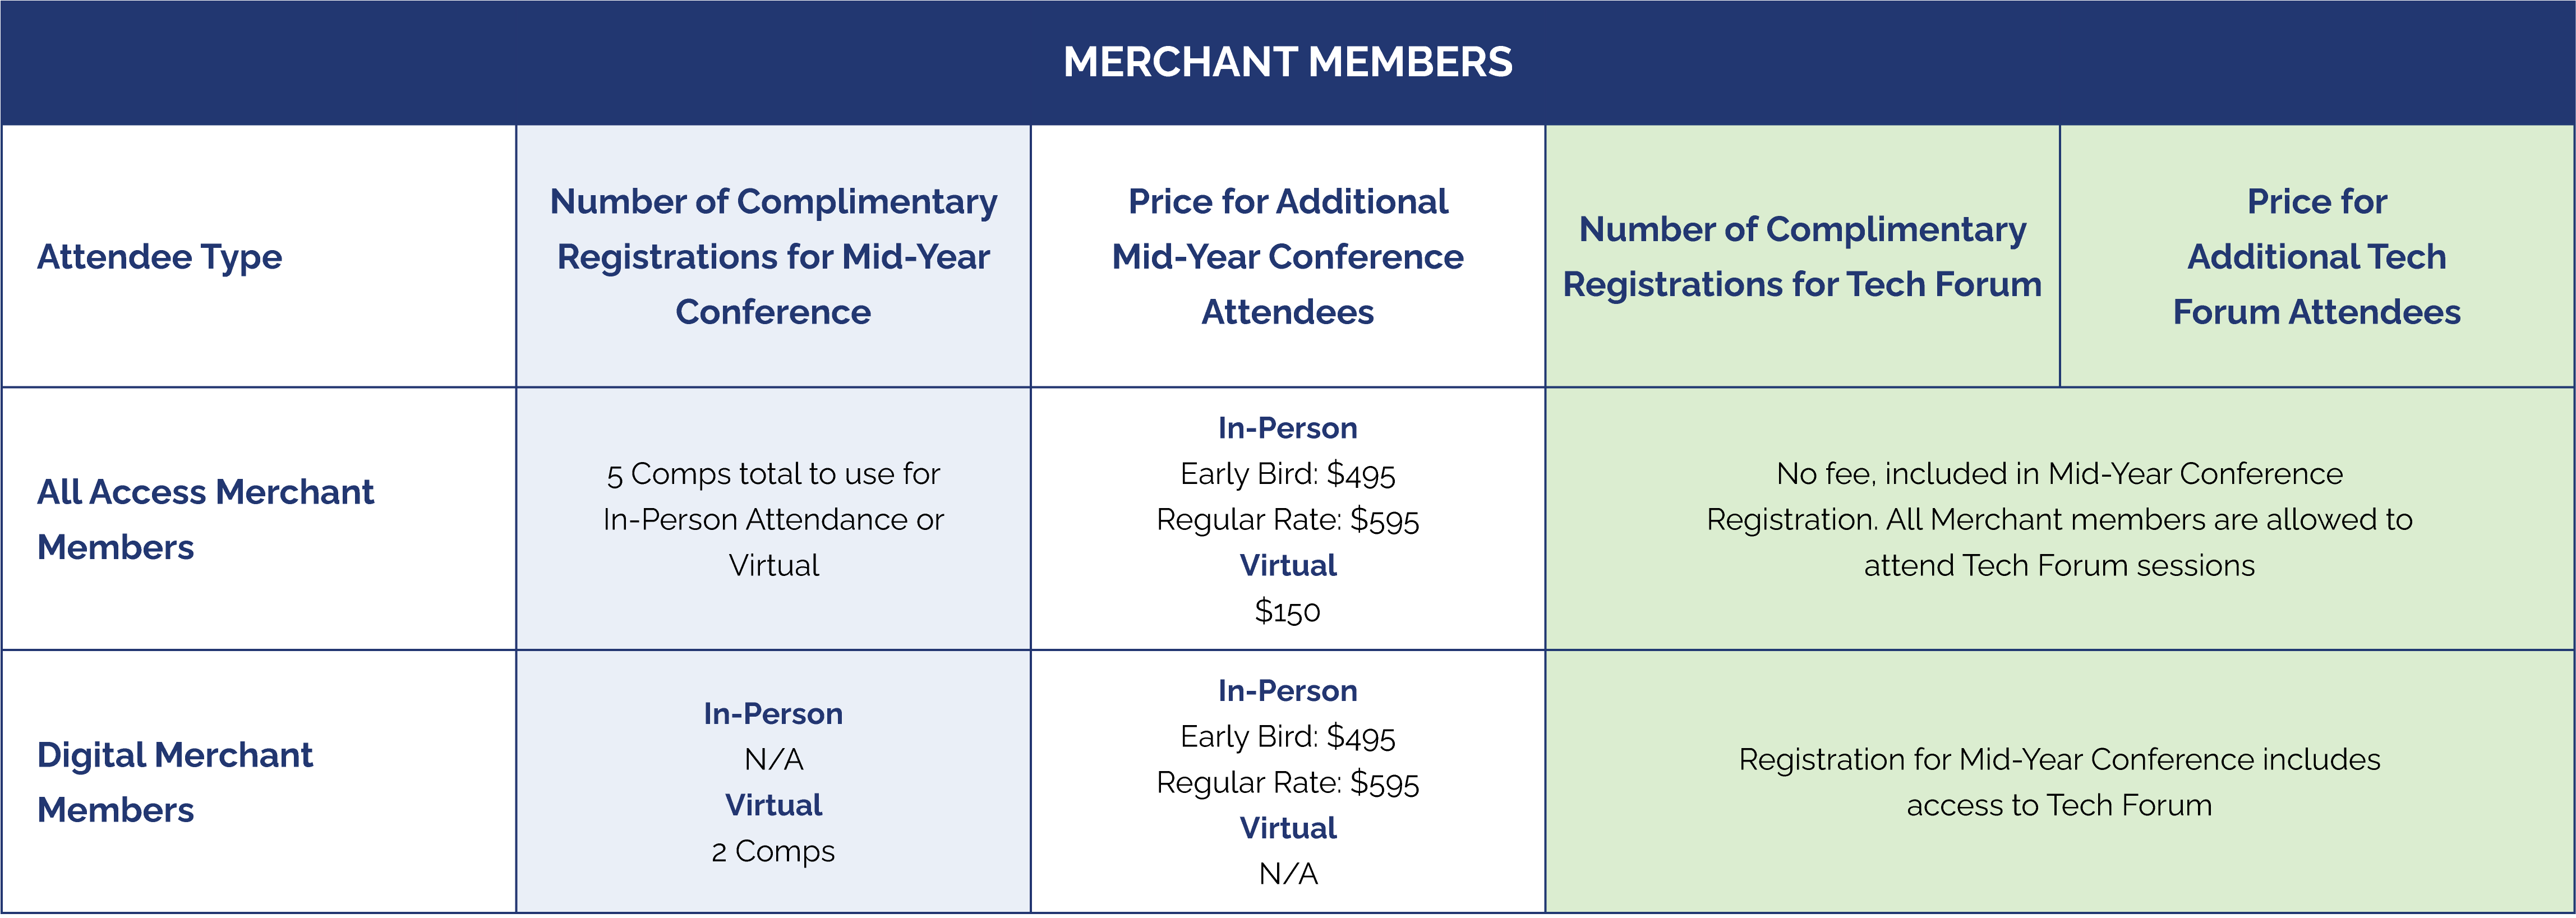 Fees for merchant members